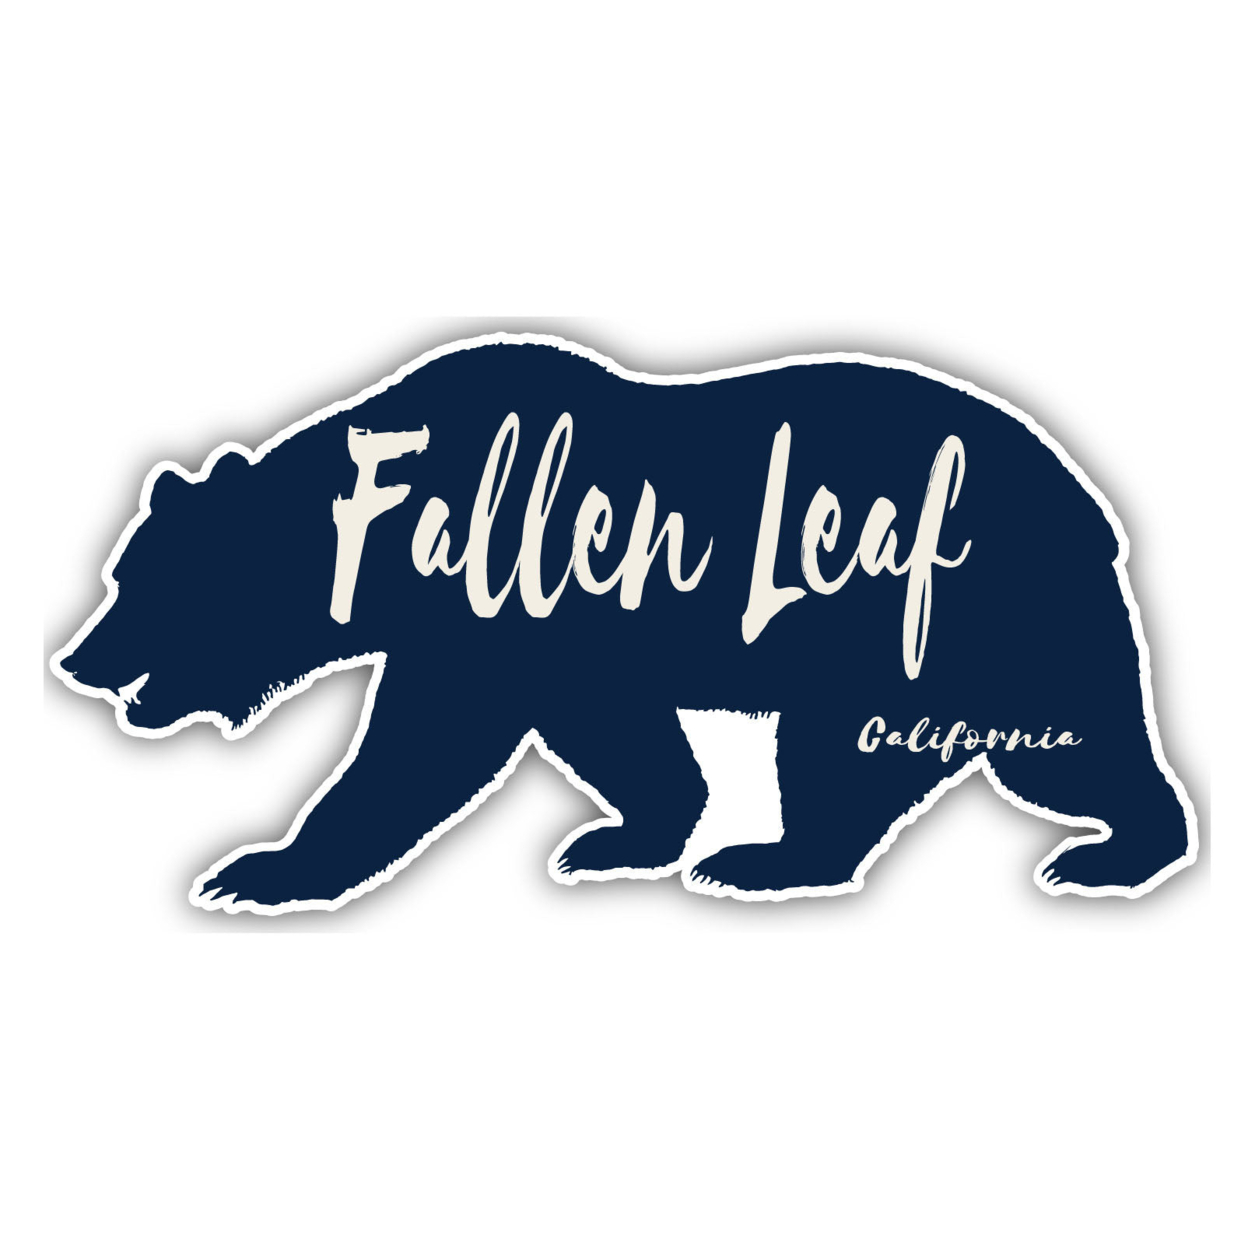 Fallen Leaf California Souvenir Decorative Stickers (Choose Theme And Size) - Single Unit, 12-Inch, Camp Life